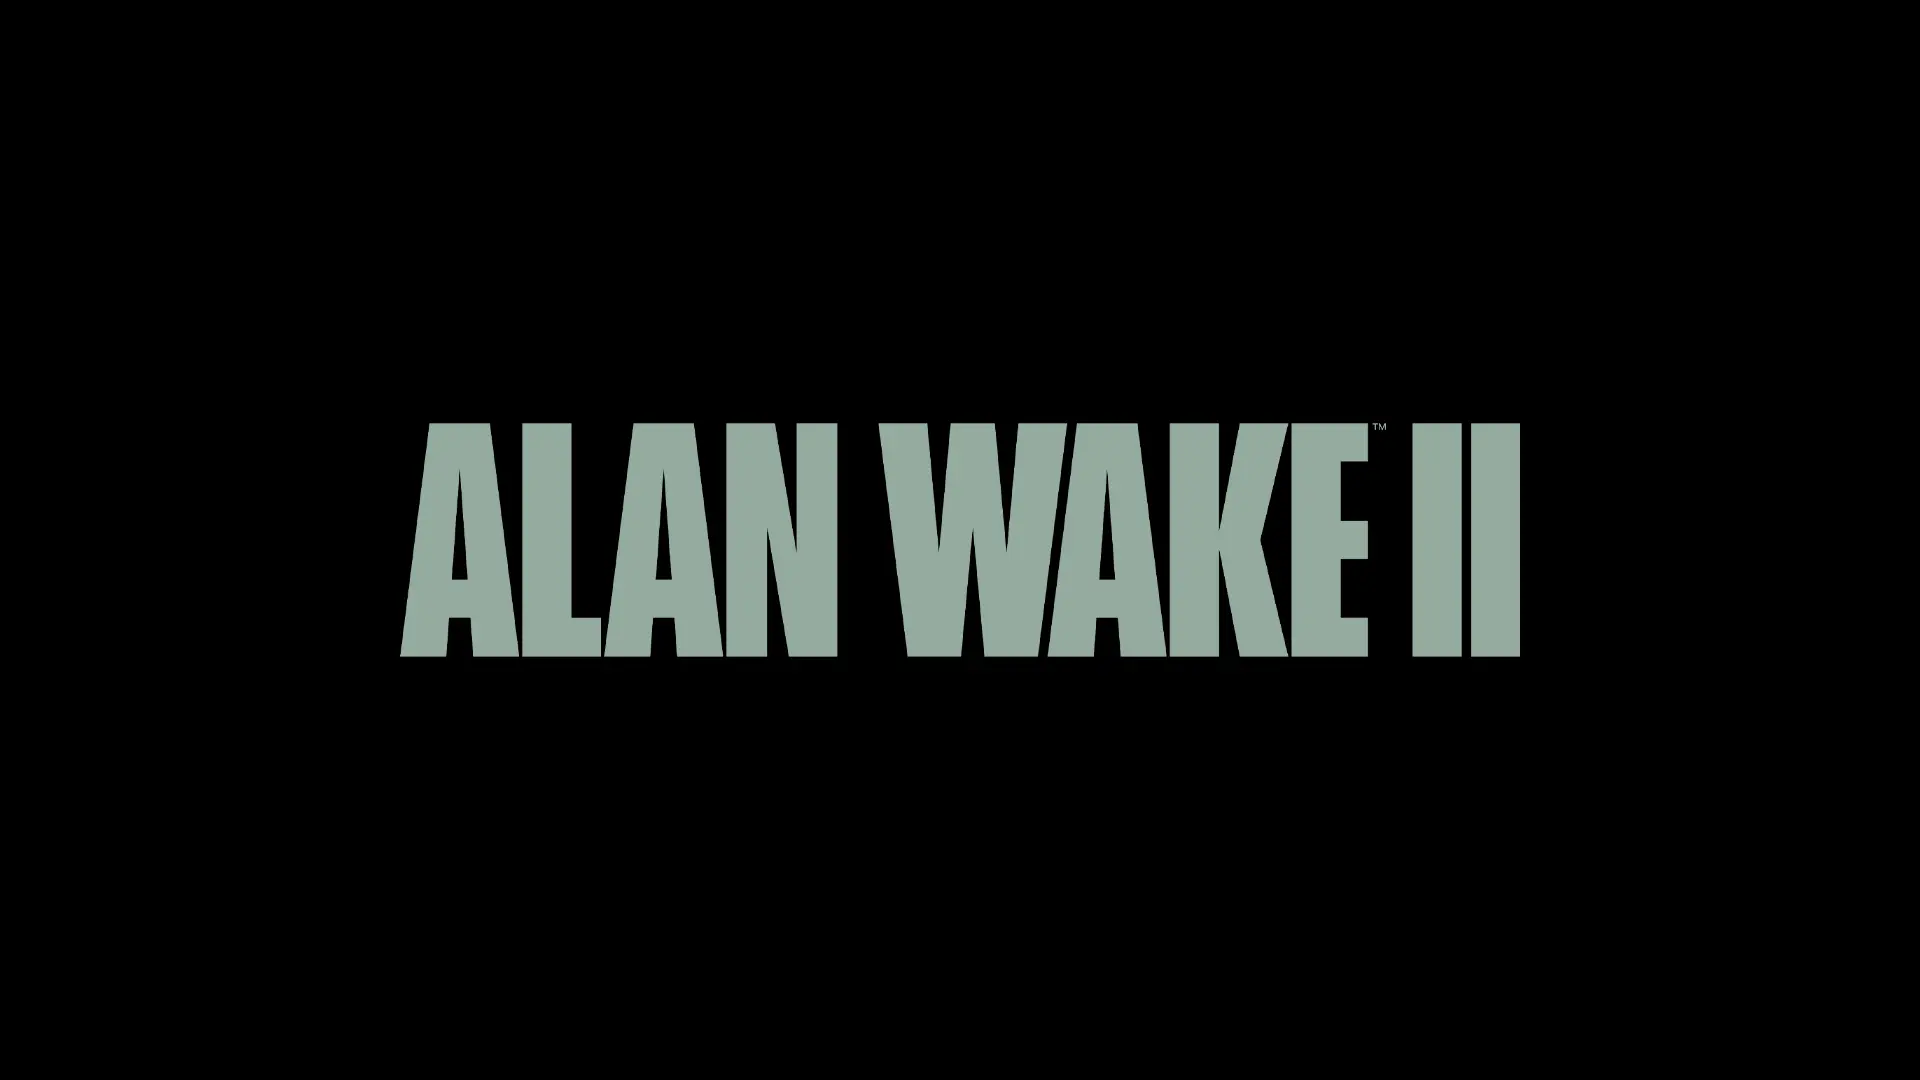 Trofeos de Alan Wake II